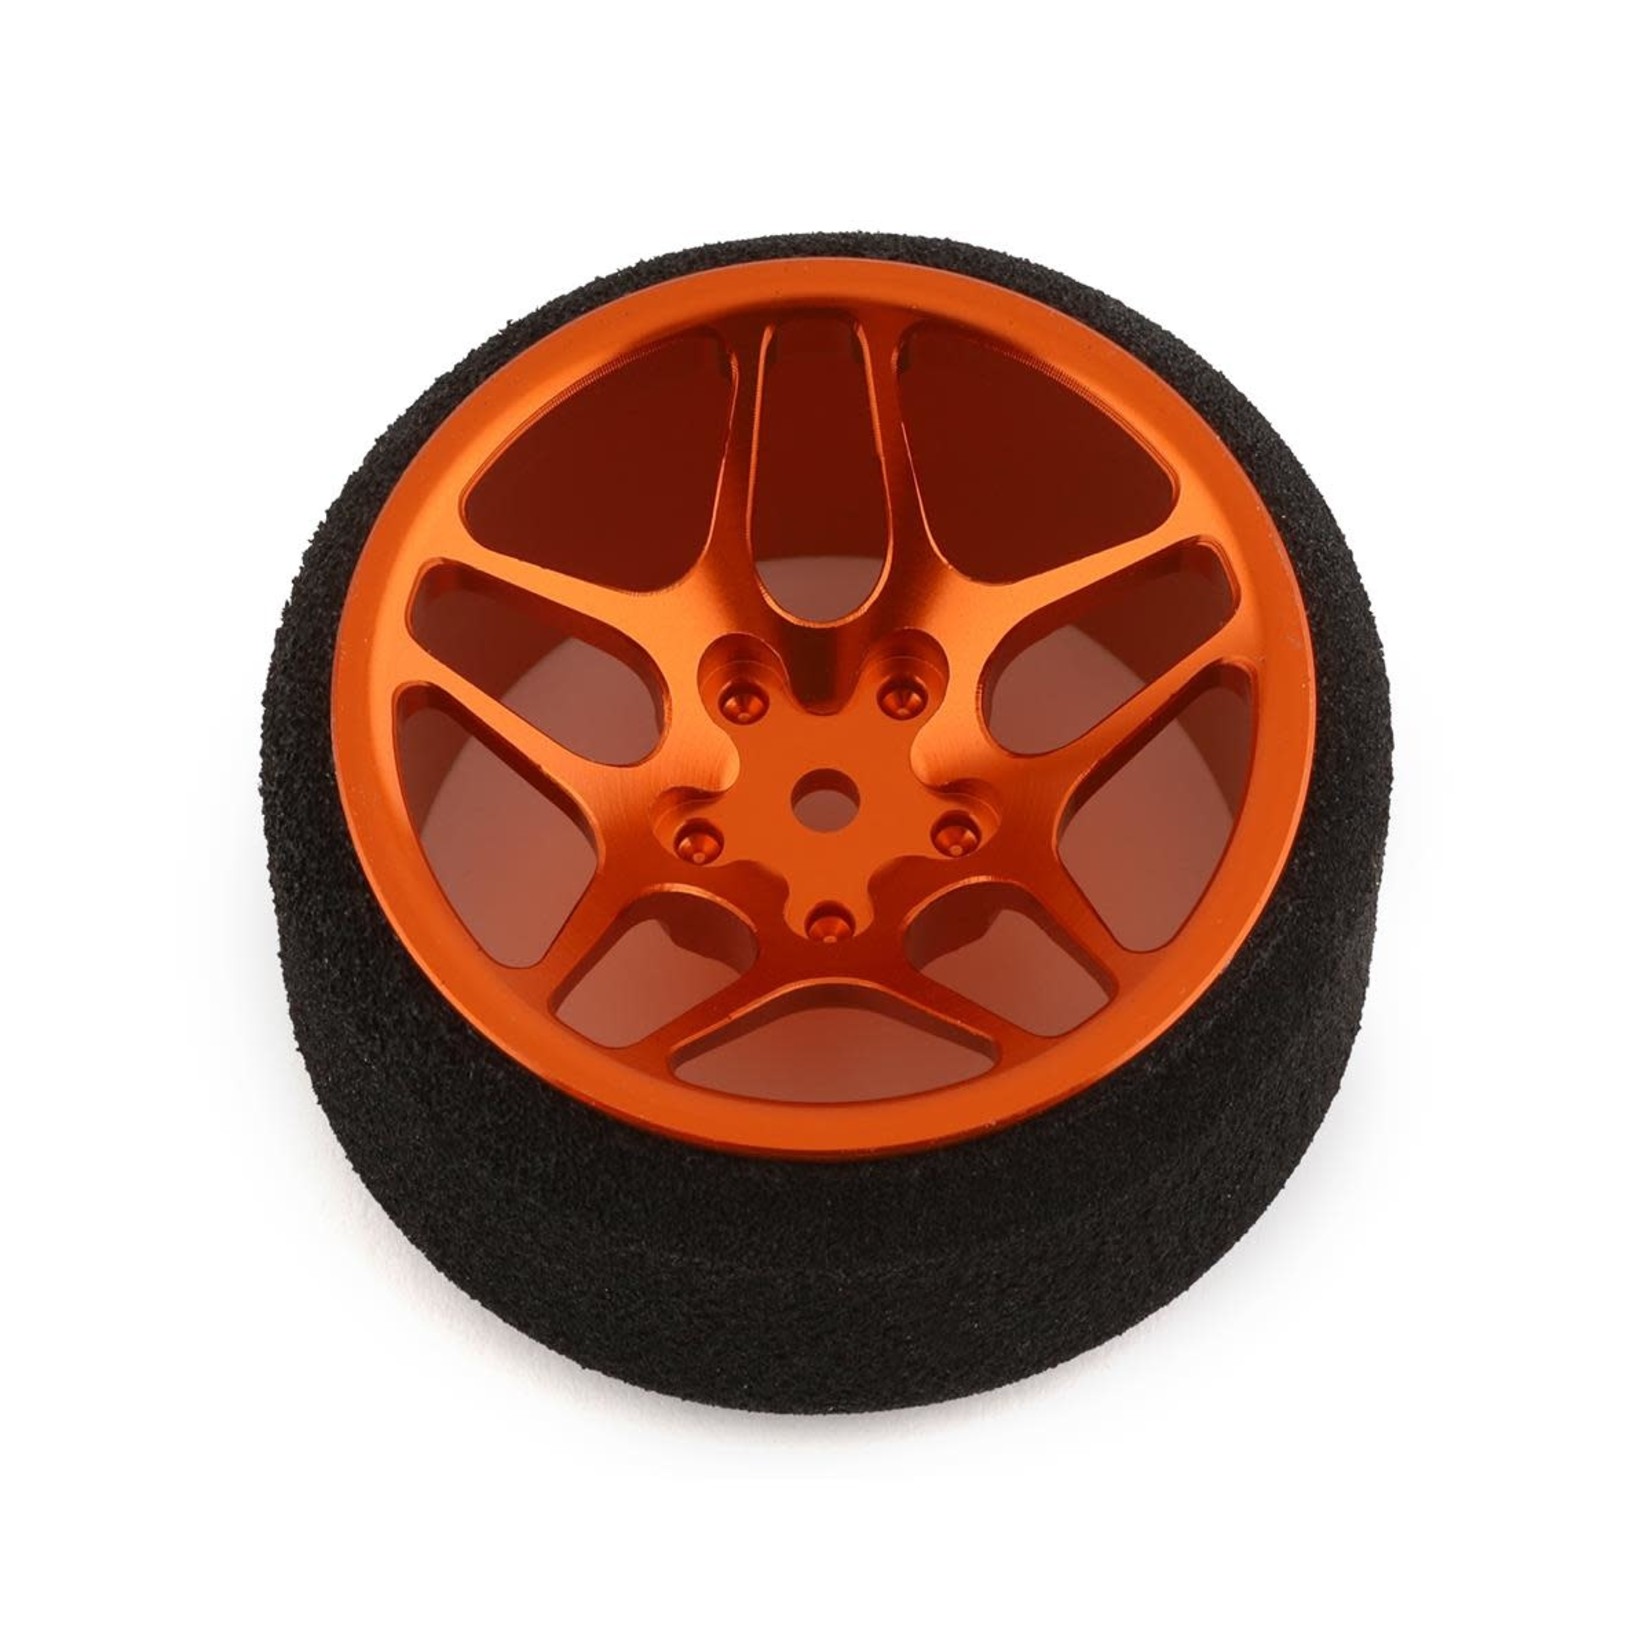 R-Design R-Design Sanwa M17/MT-44 Ultrawide 10-Spoke Transmitter Steering Wheel (Orange) #RDD4915